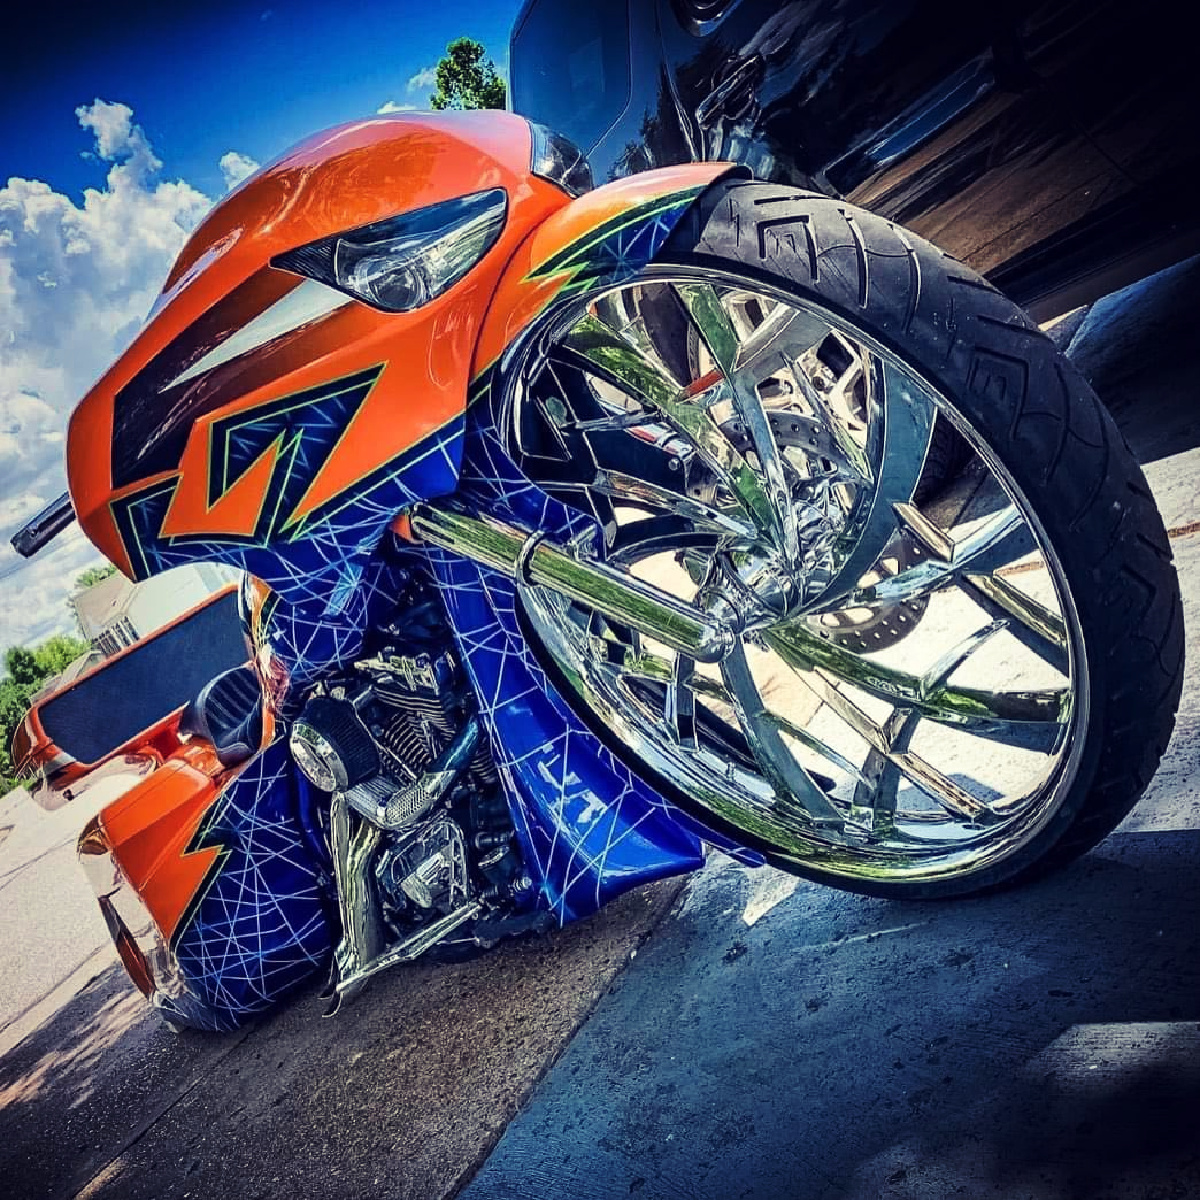 Harley-Davidson custom Road Glide bagger motorcycle with SMT Astro 34" big wheel